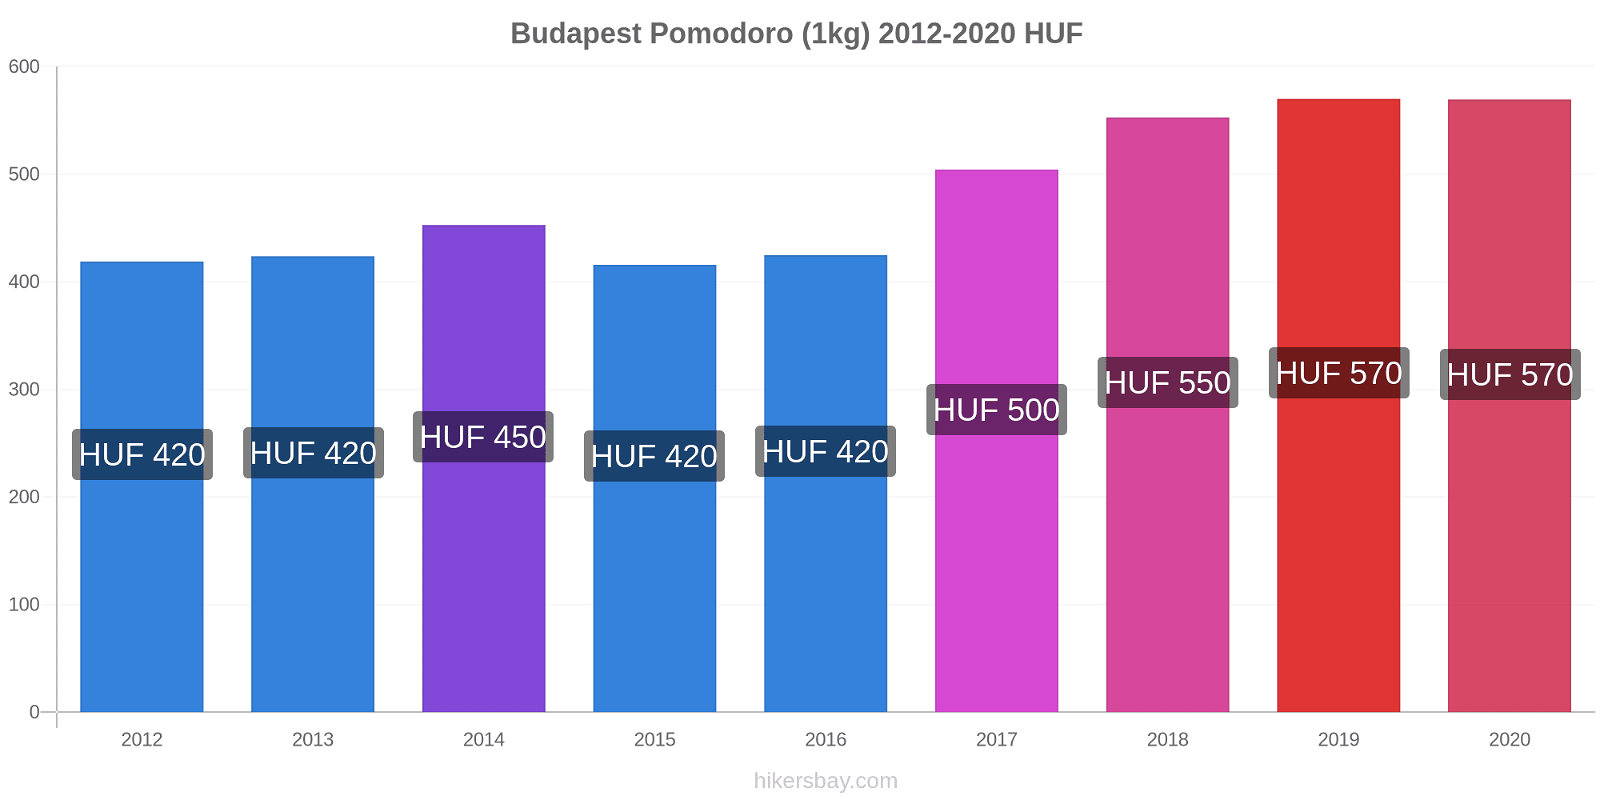 Budapest variazioni di prezzo Pomodoro (1kg) hikersbay.com